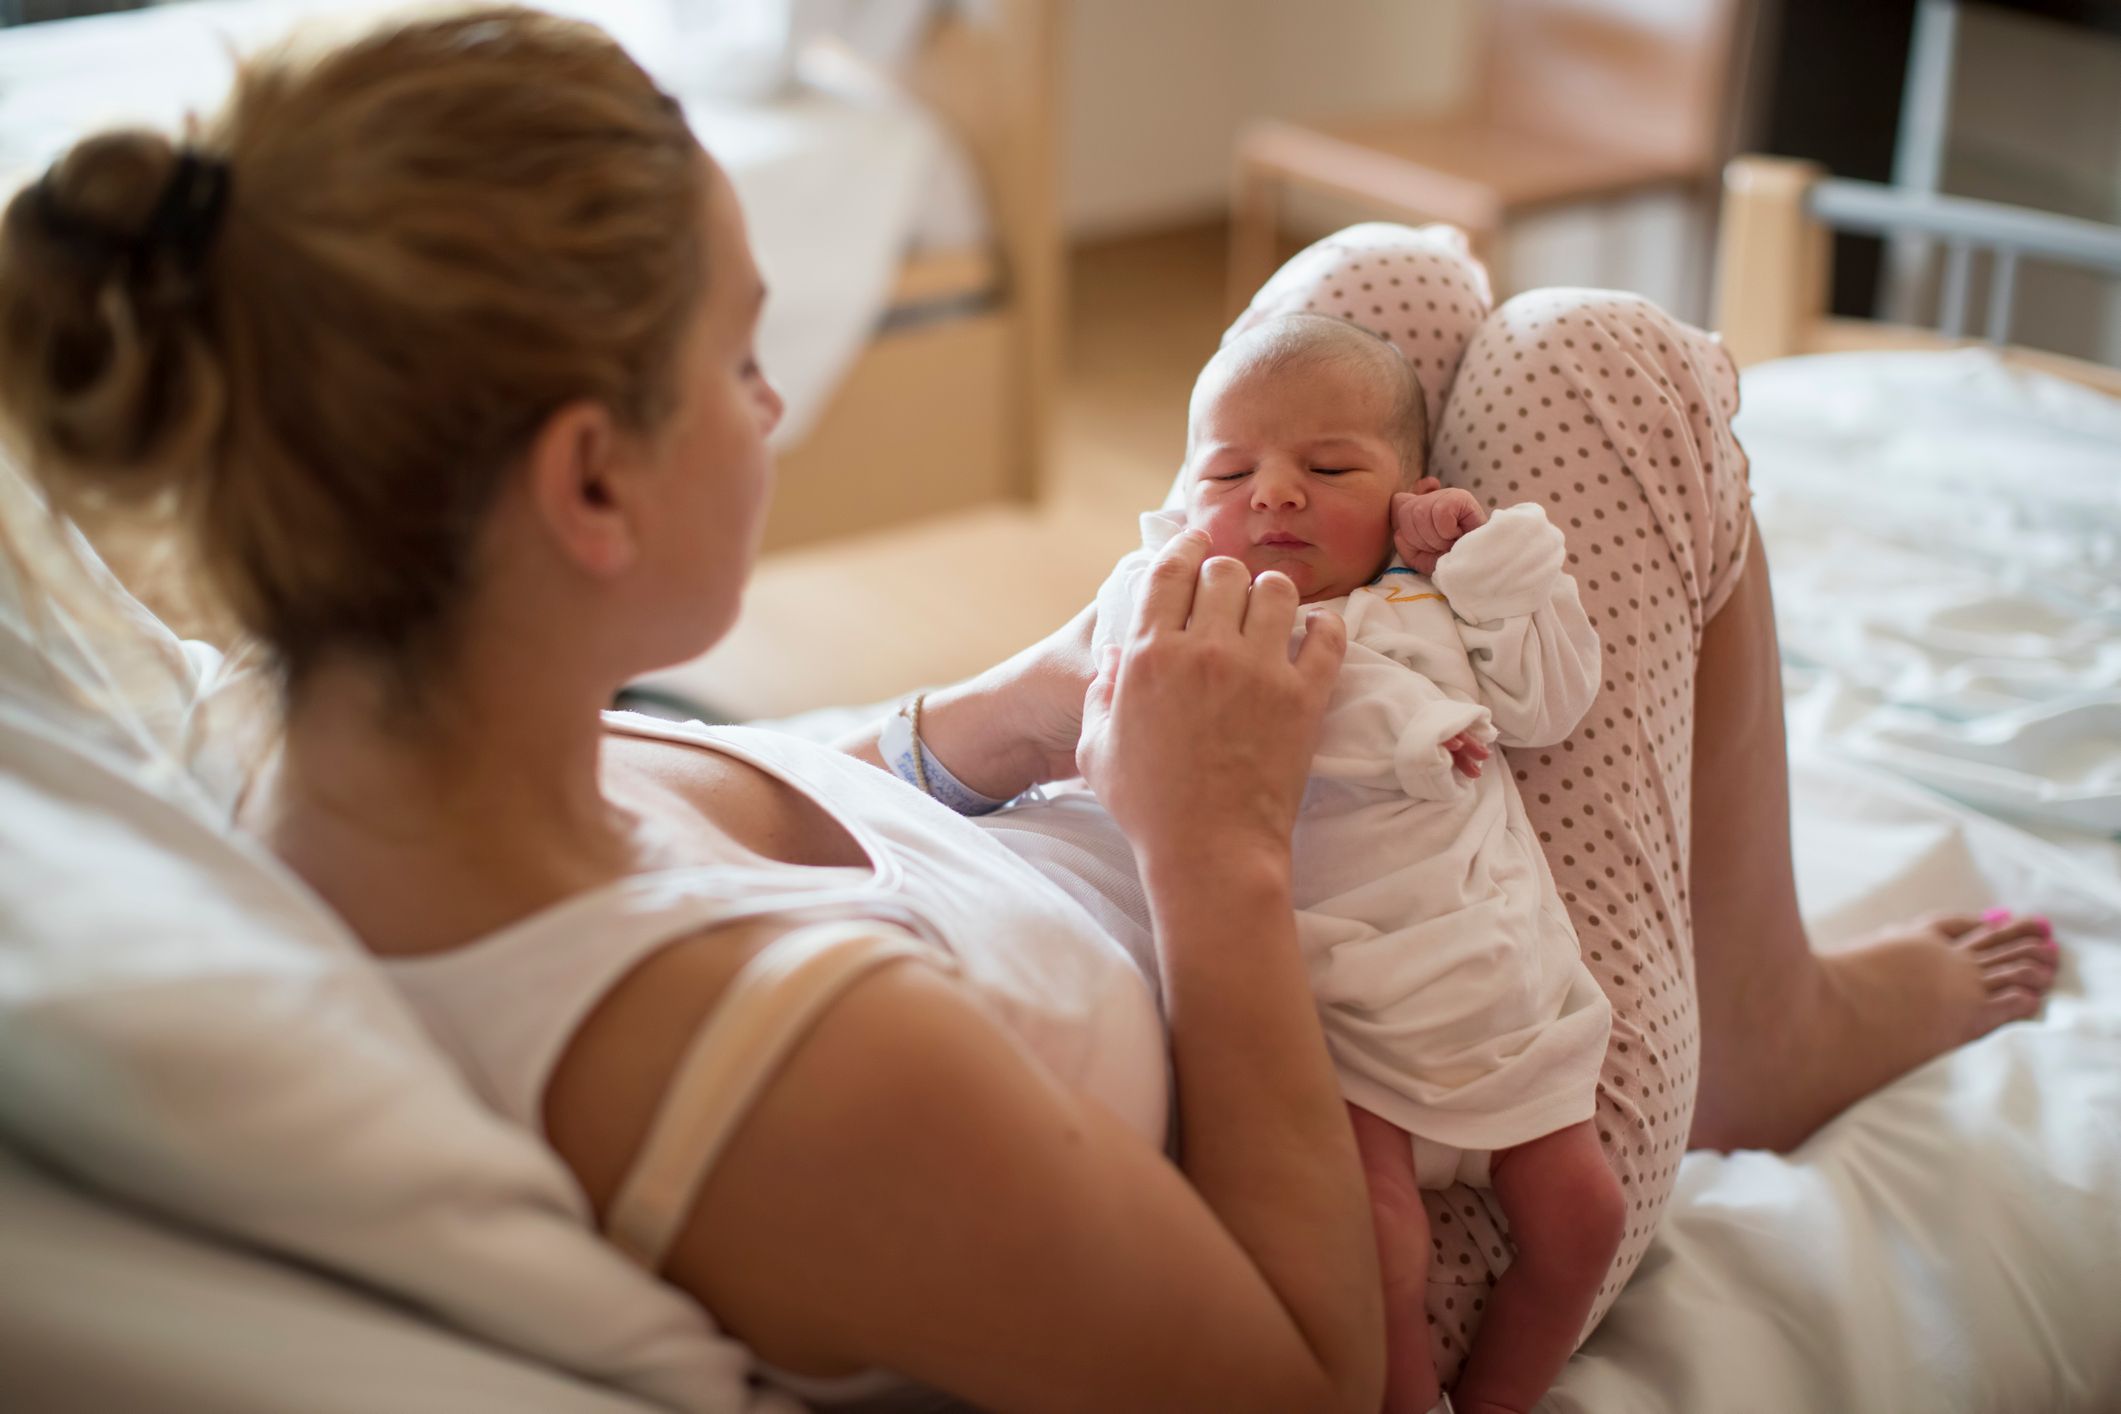 A mother holding her newborn baby. | Source: Shutterstock